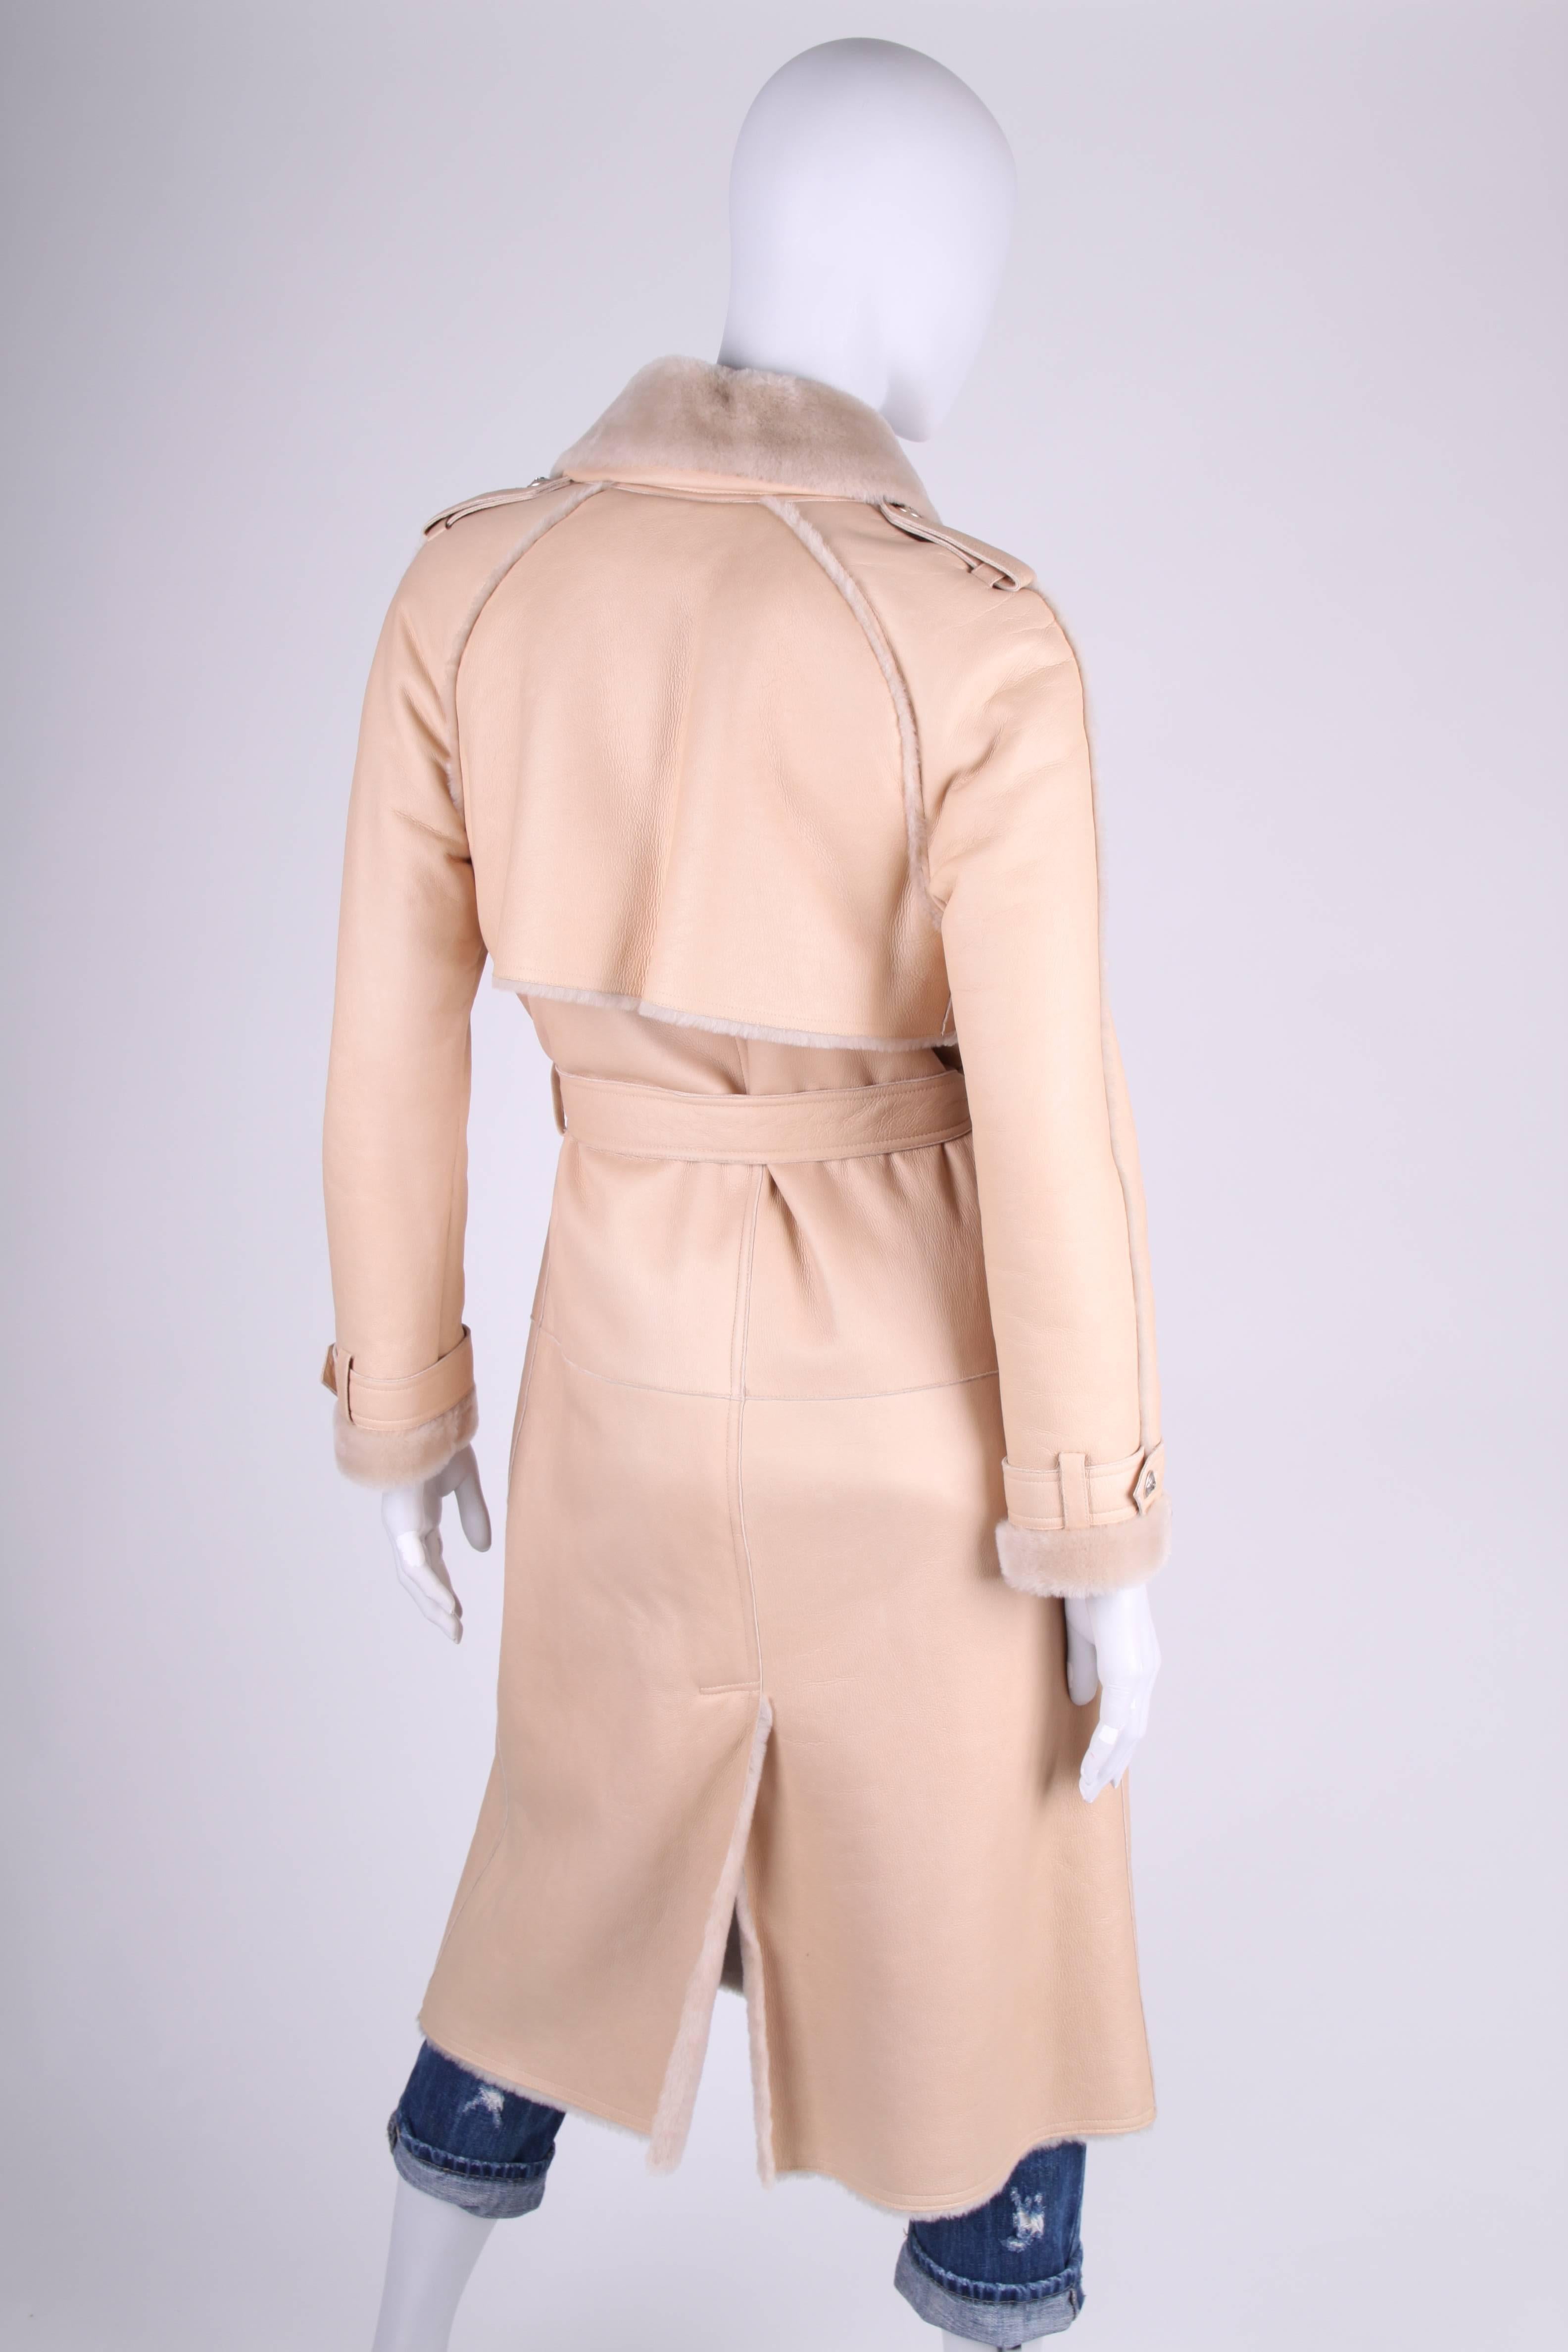 Chanel Trenchcoat - beige lambskin leather 1